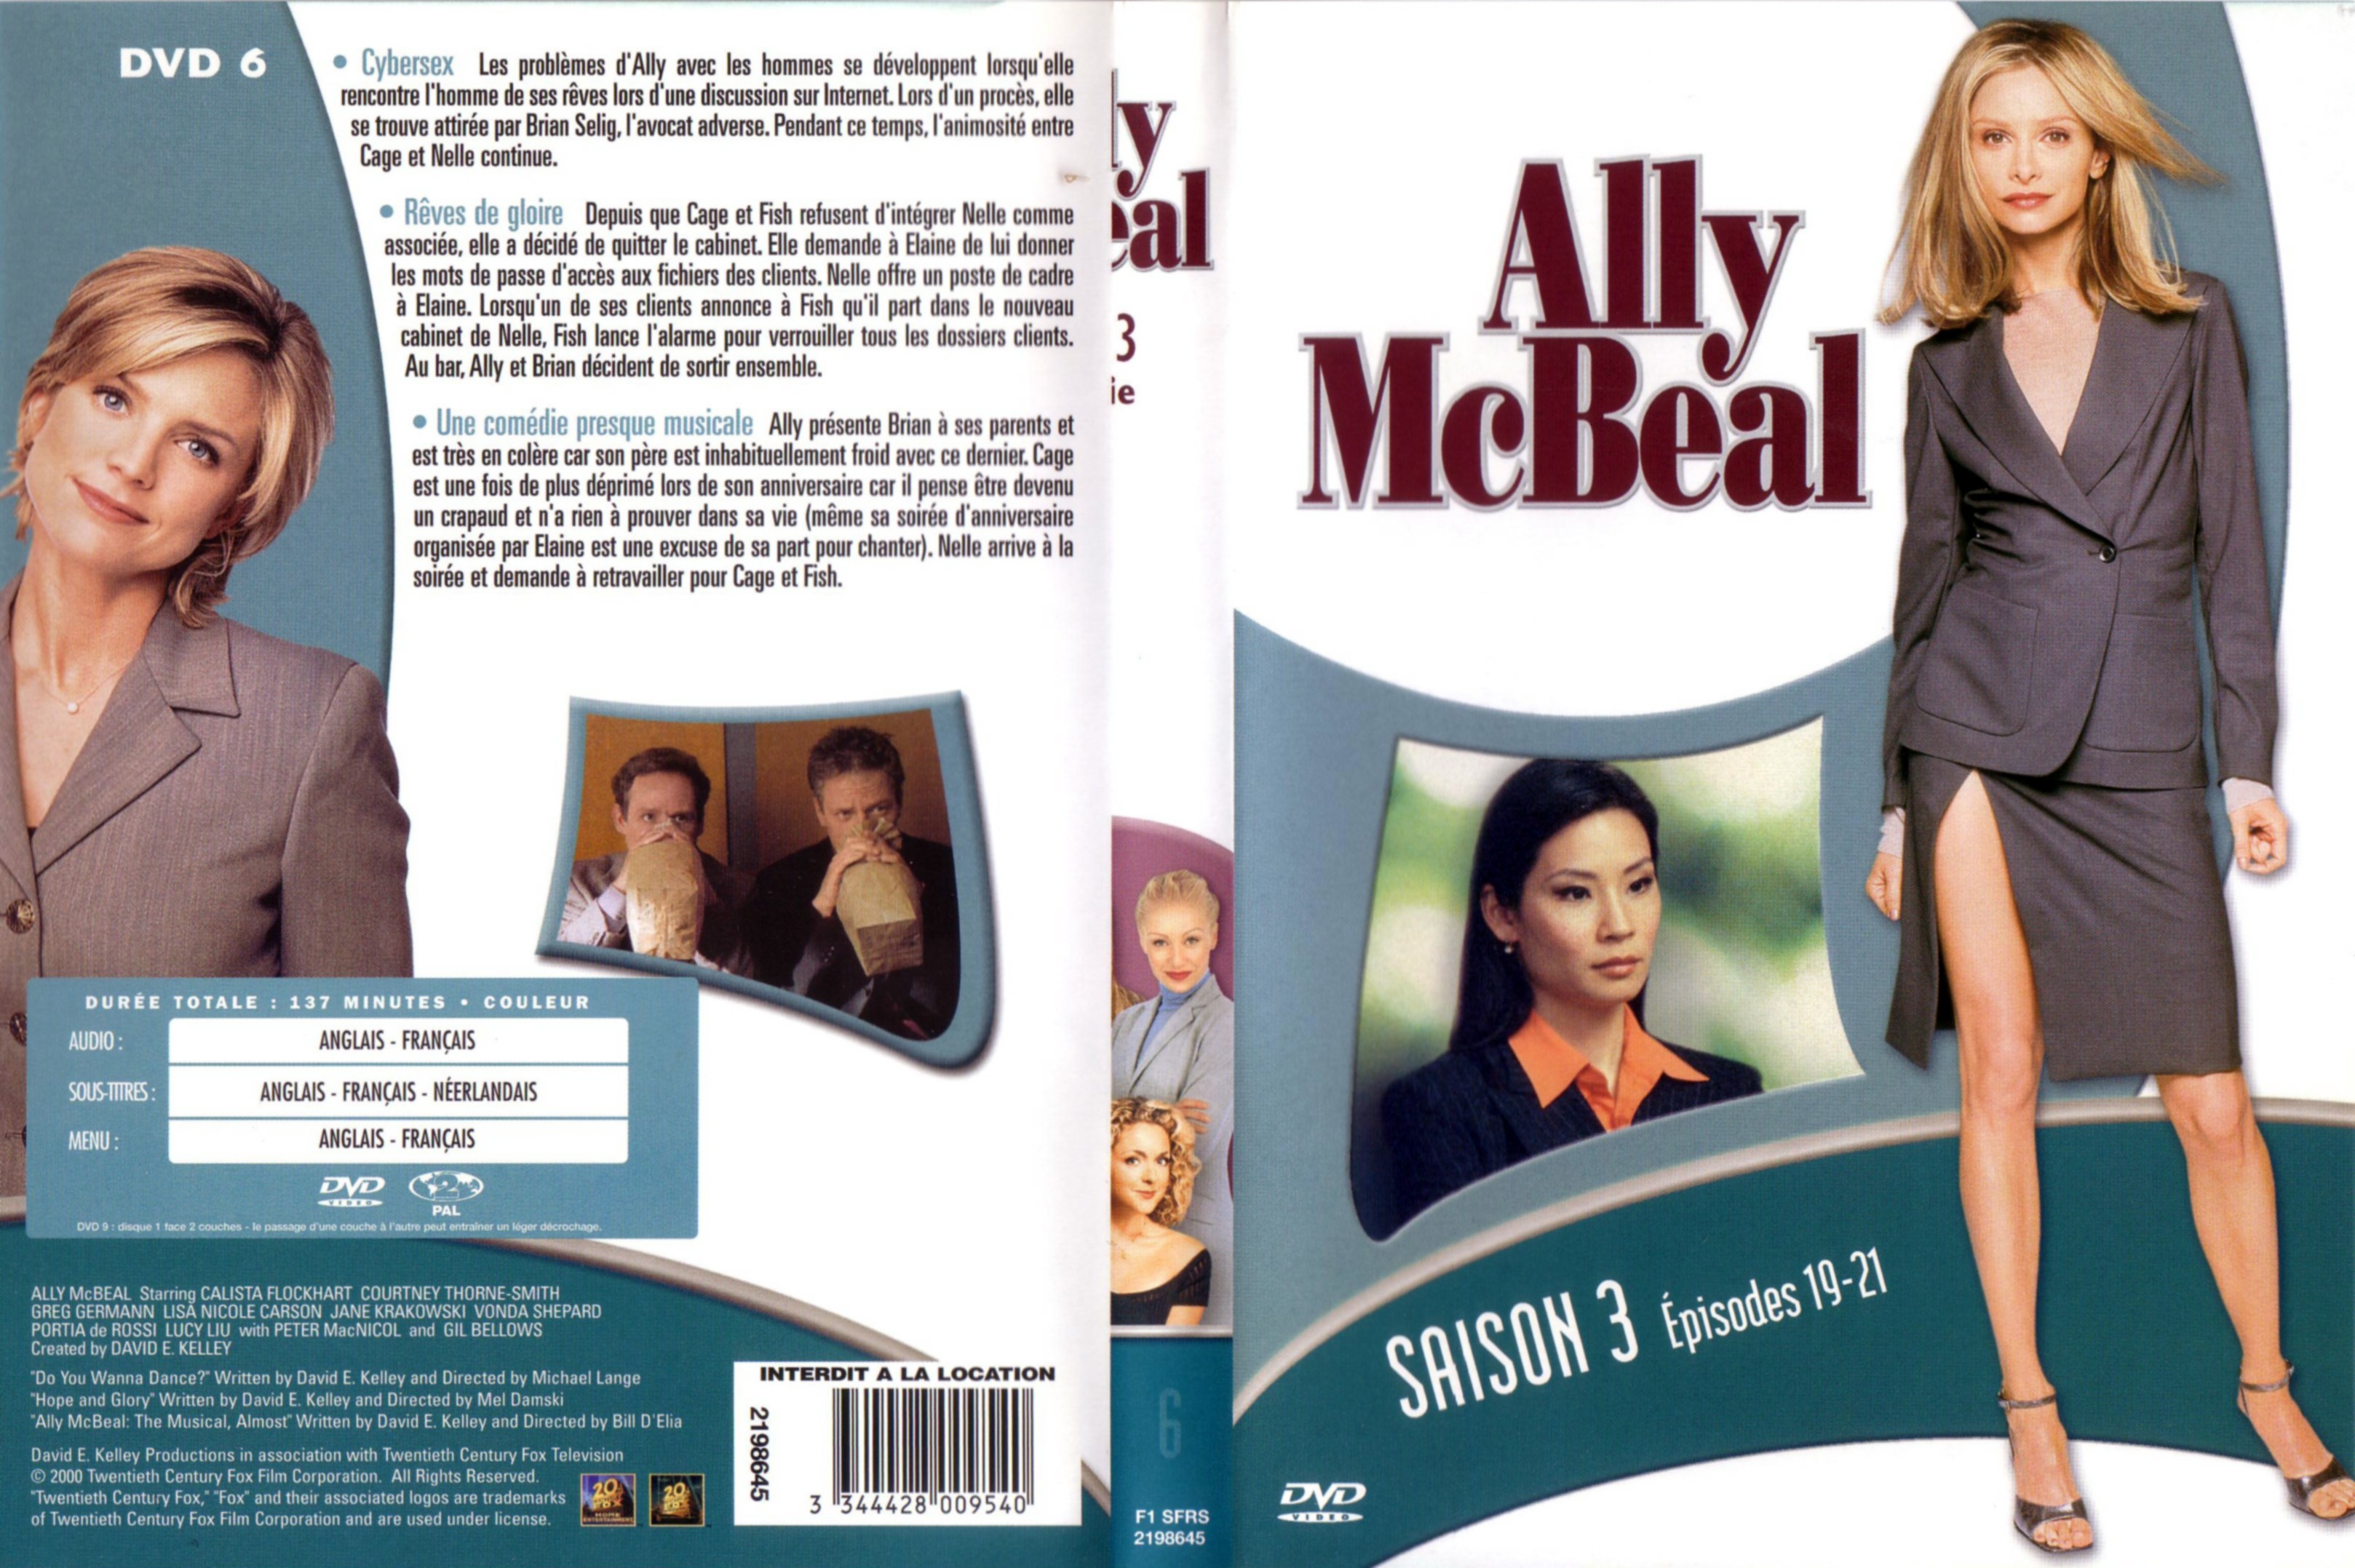 Jaquette DVD Ally McBeal saison 3 DVD 6